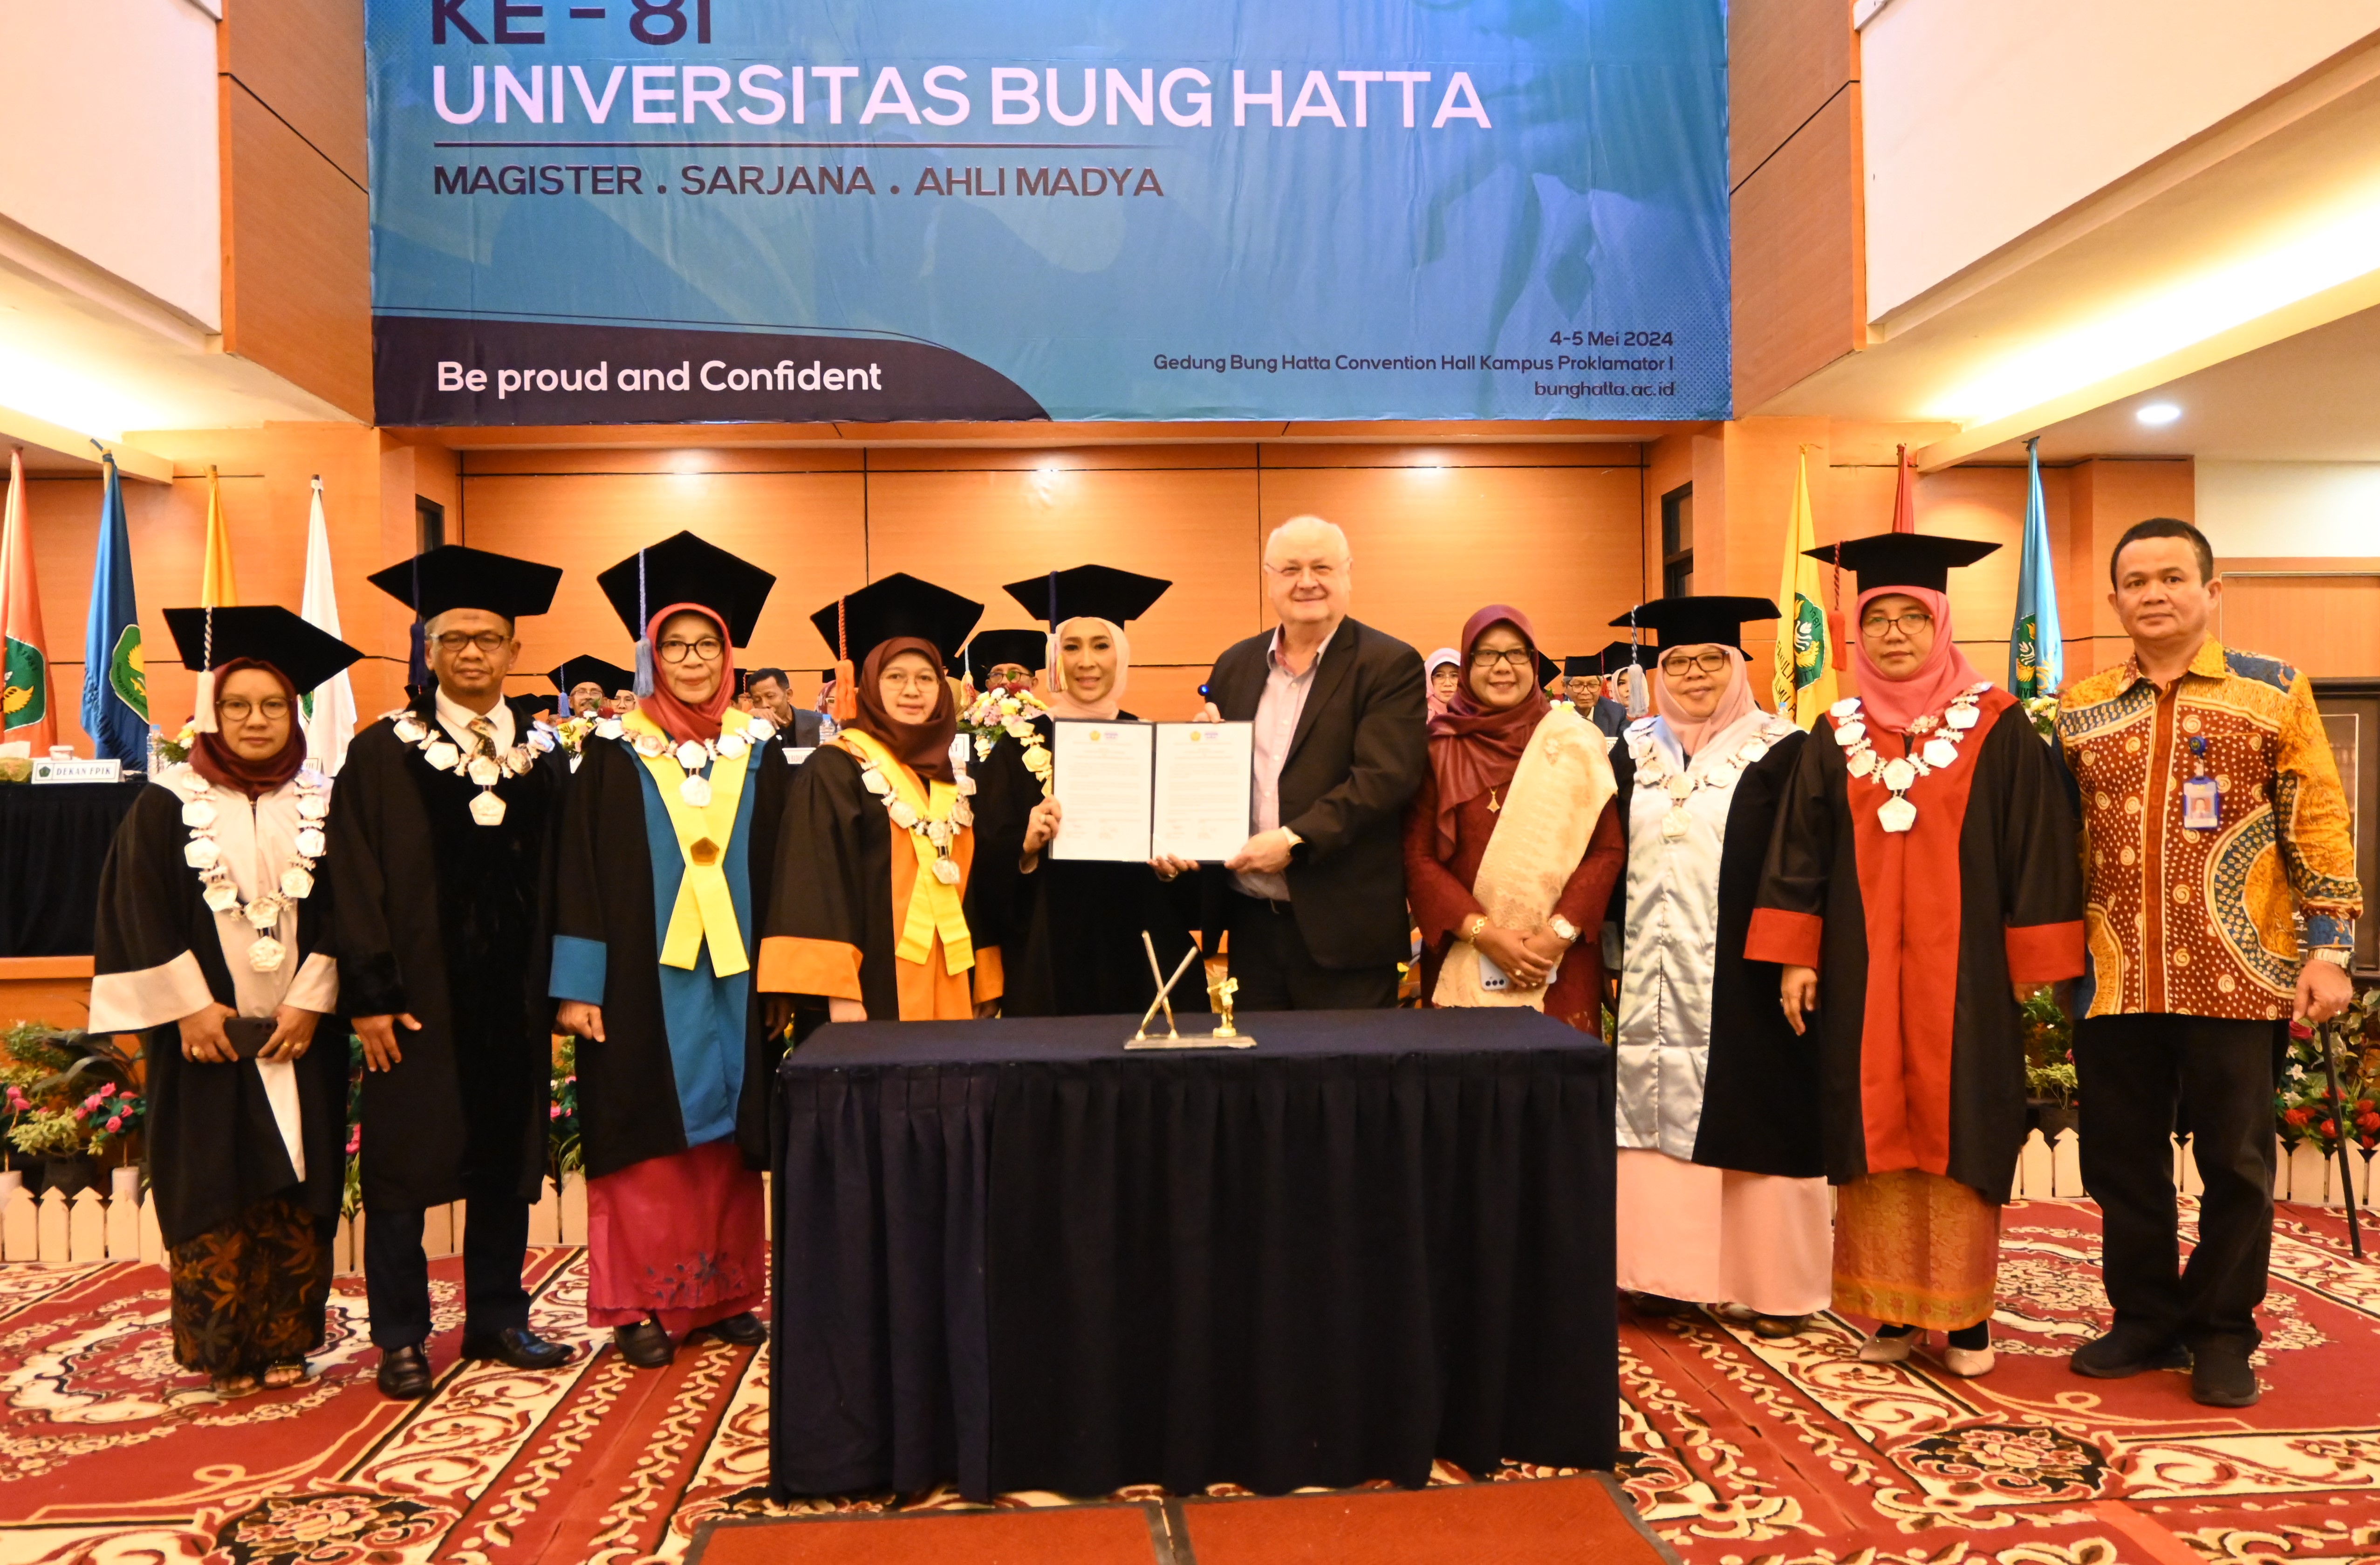  Momen Wisuda ke-81, Universitas Bung Hatta Tandatangani MoU dengan International Centre For Hydropower, Norway